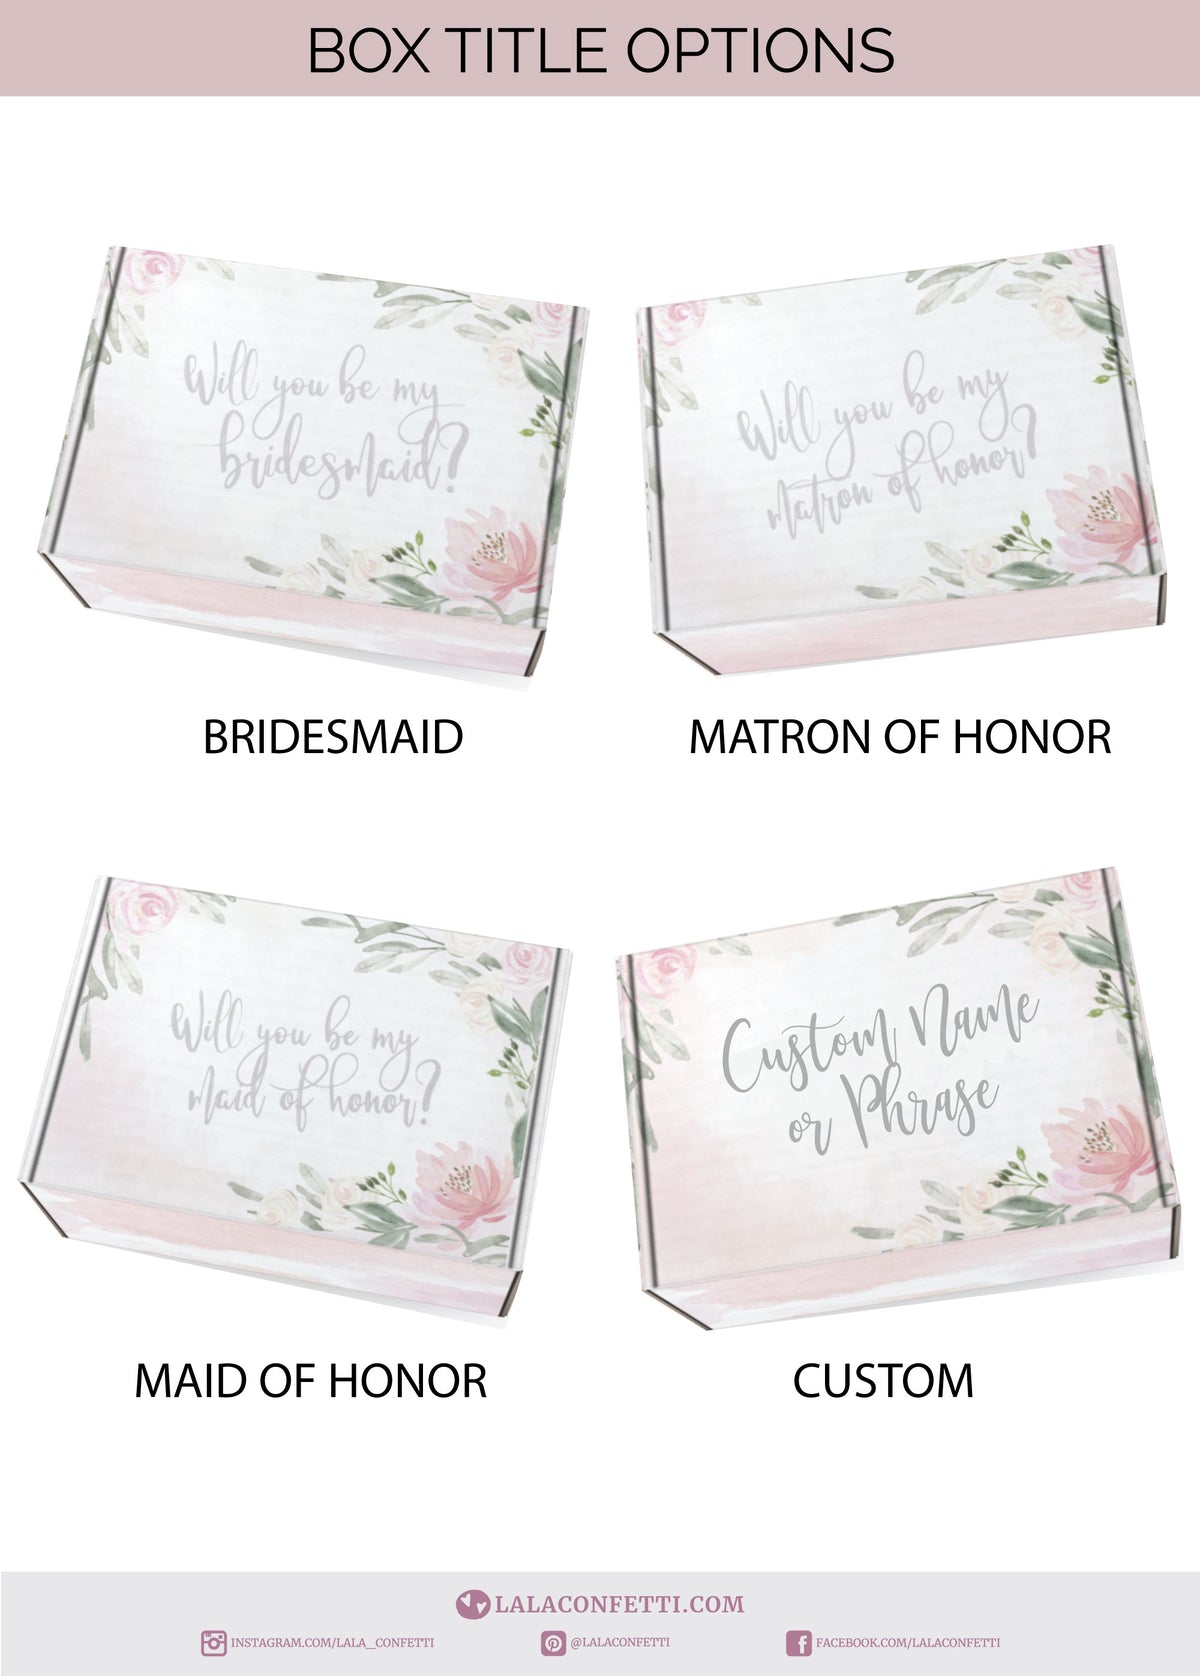 Bridesmaid Proposal Box - Original Edition